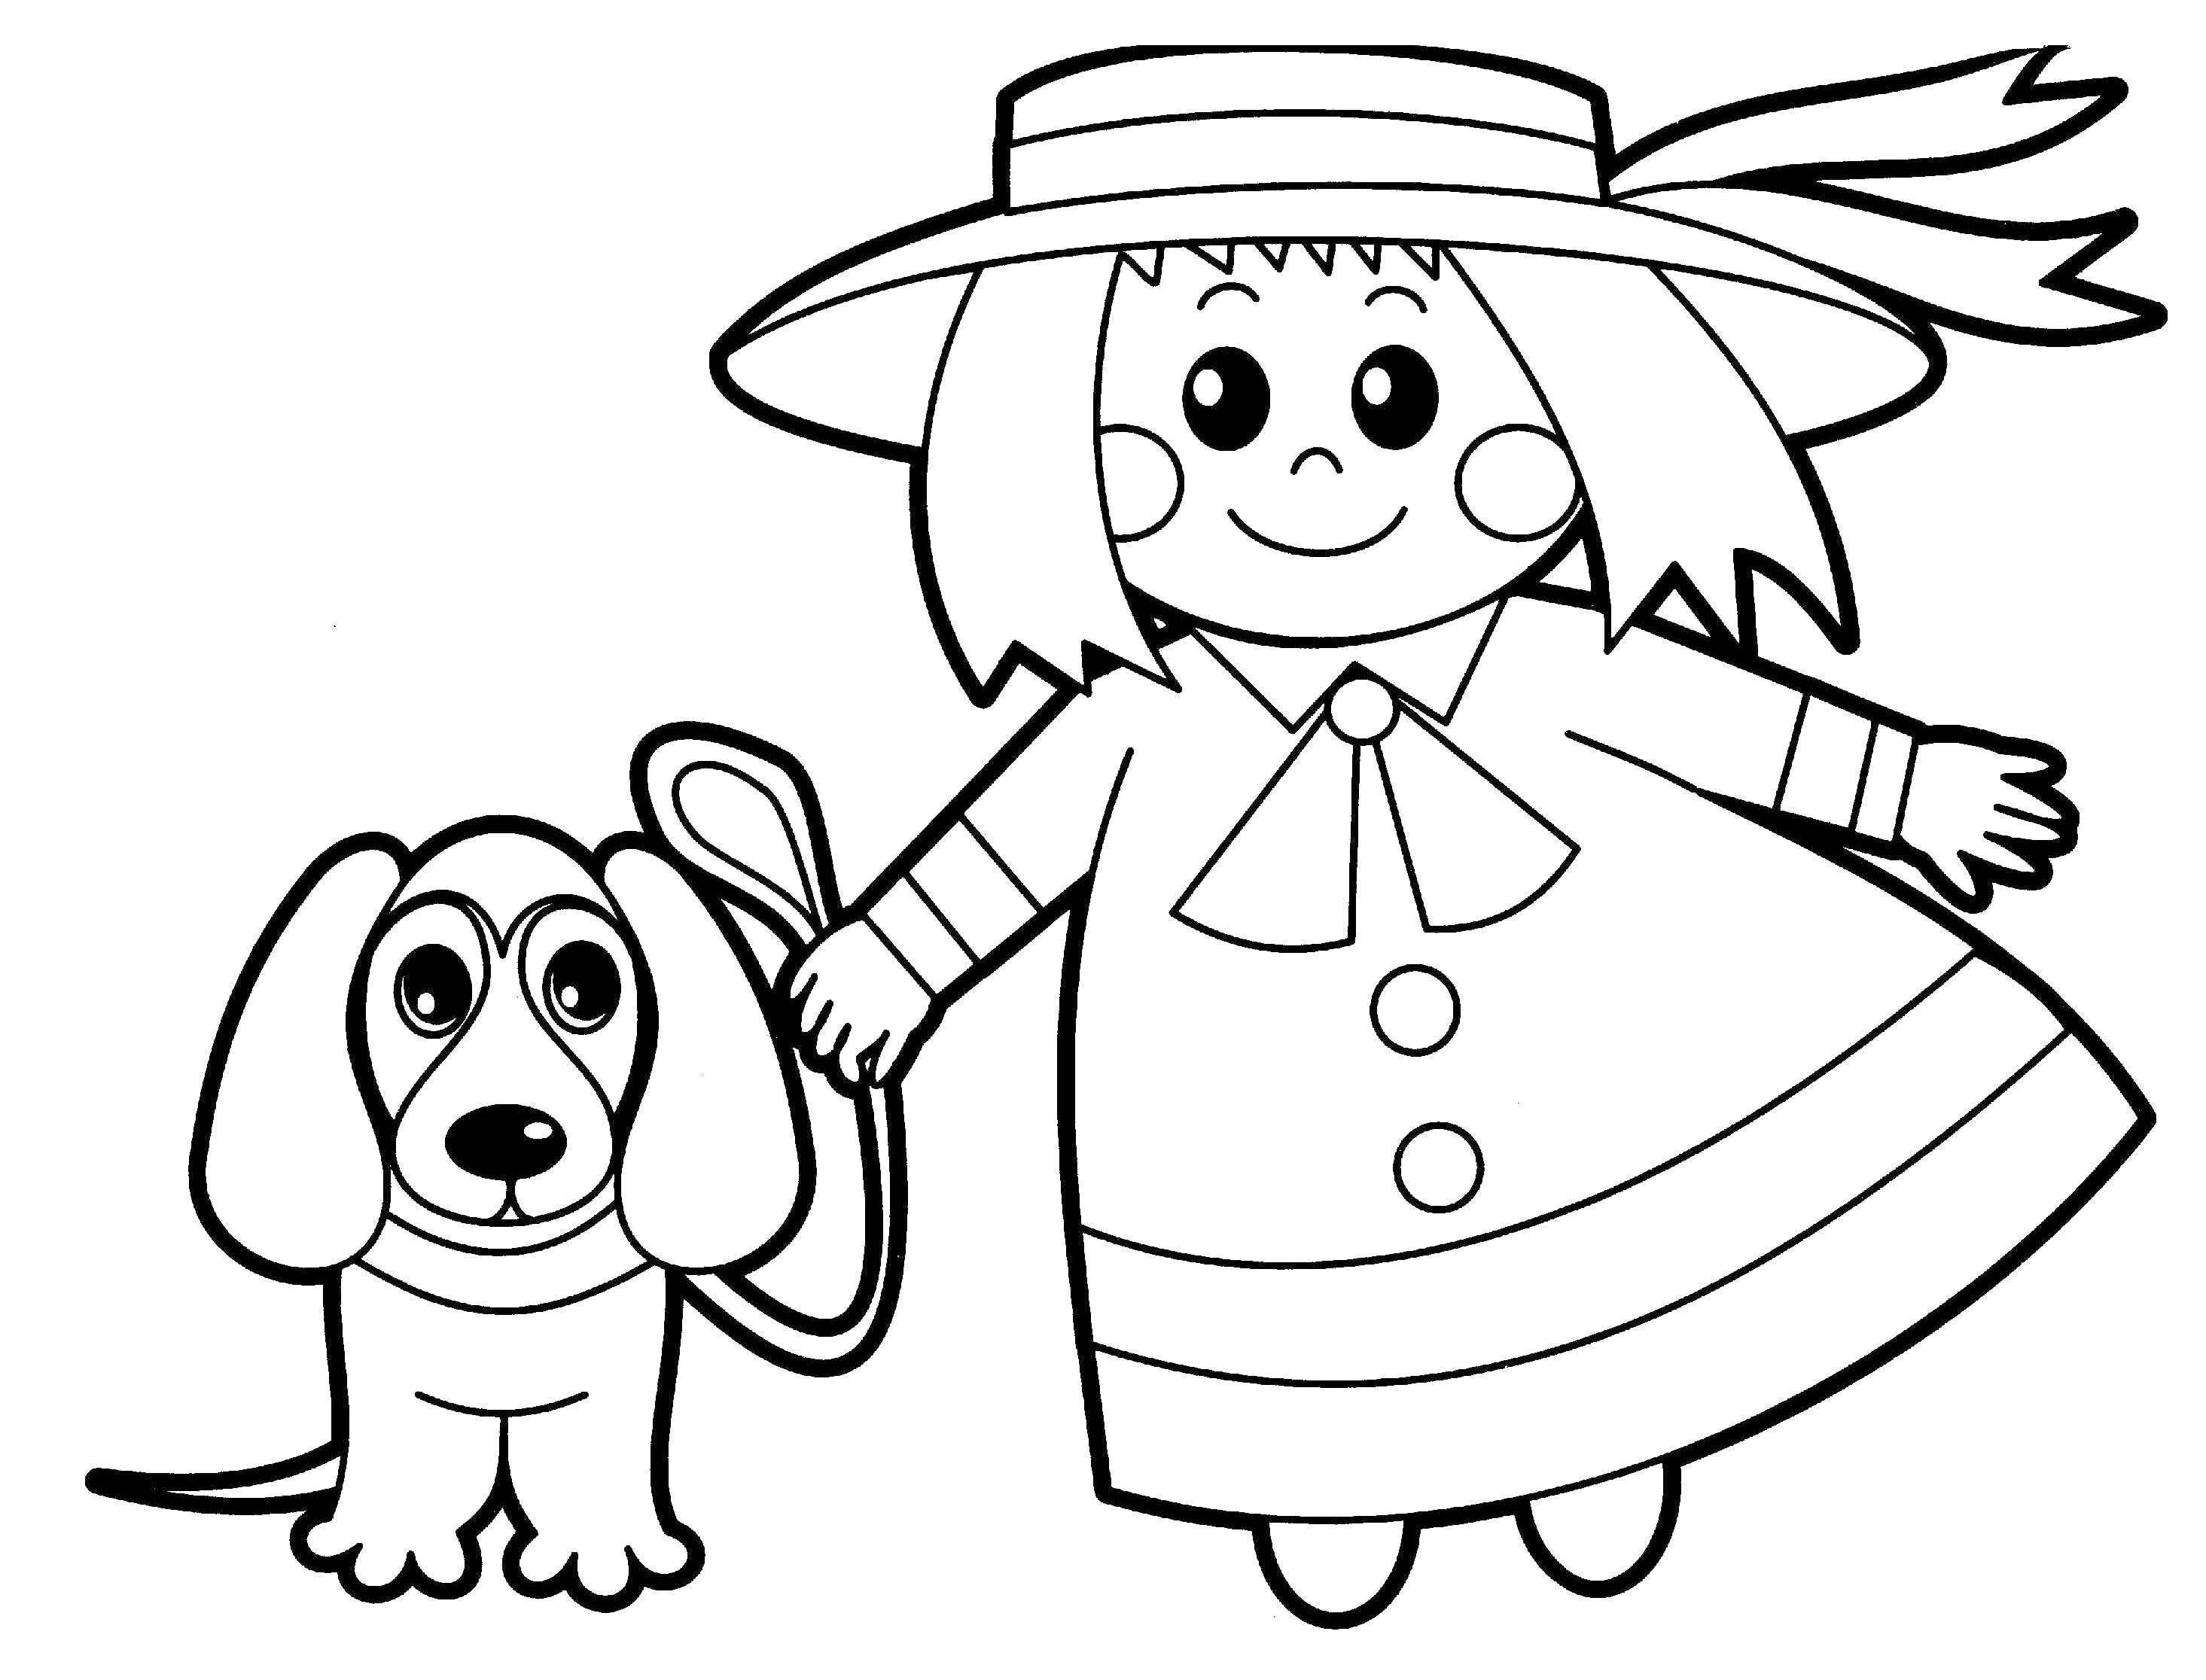 Название: Раскраска Девочка и собака. Категория: Люди. Теги: девочка, собака.